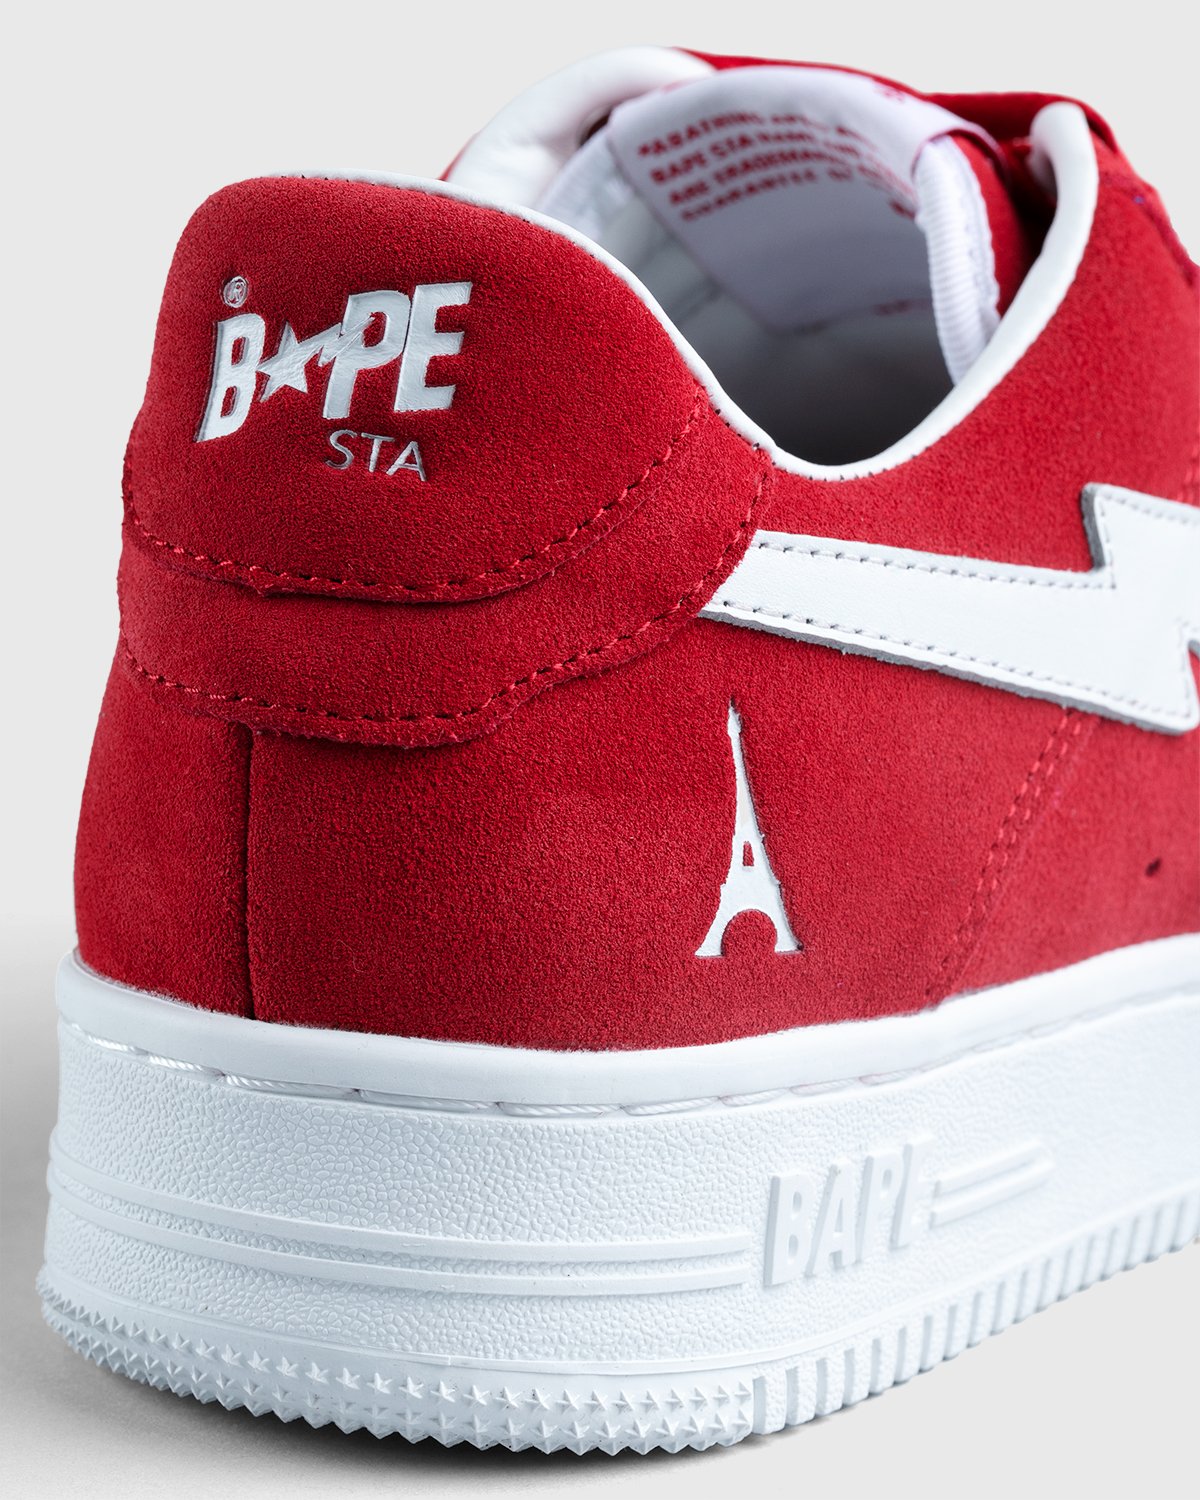 BAPE x Highsnobiety - BAPE STA Red - Footwear - Red - Image 7